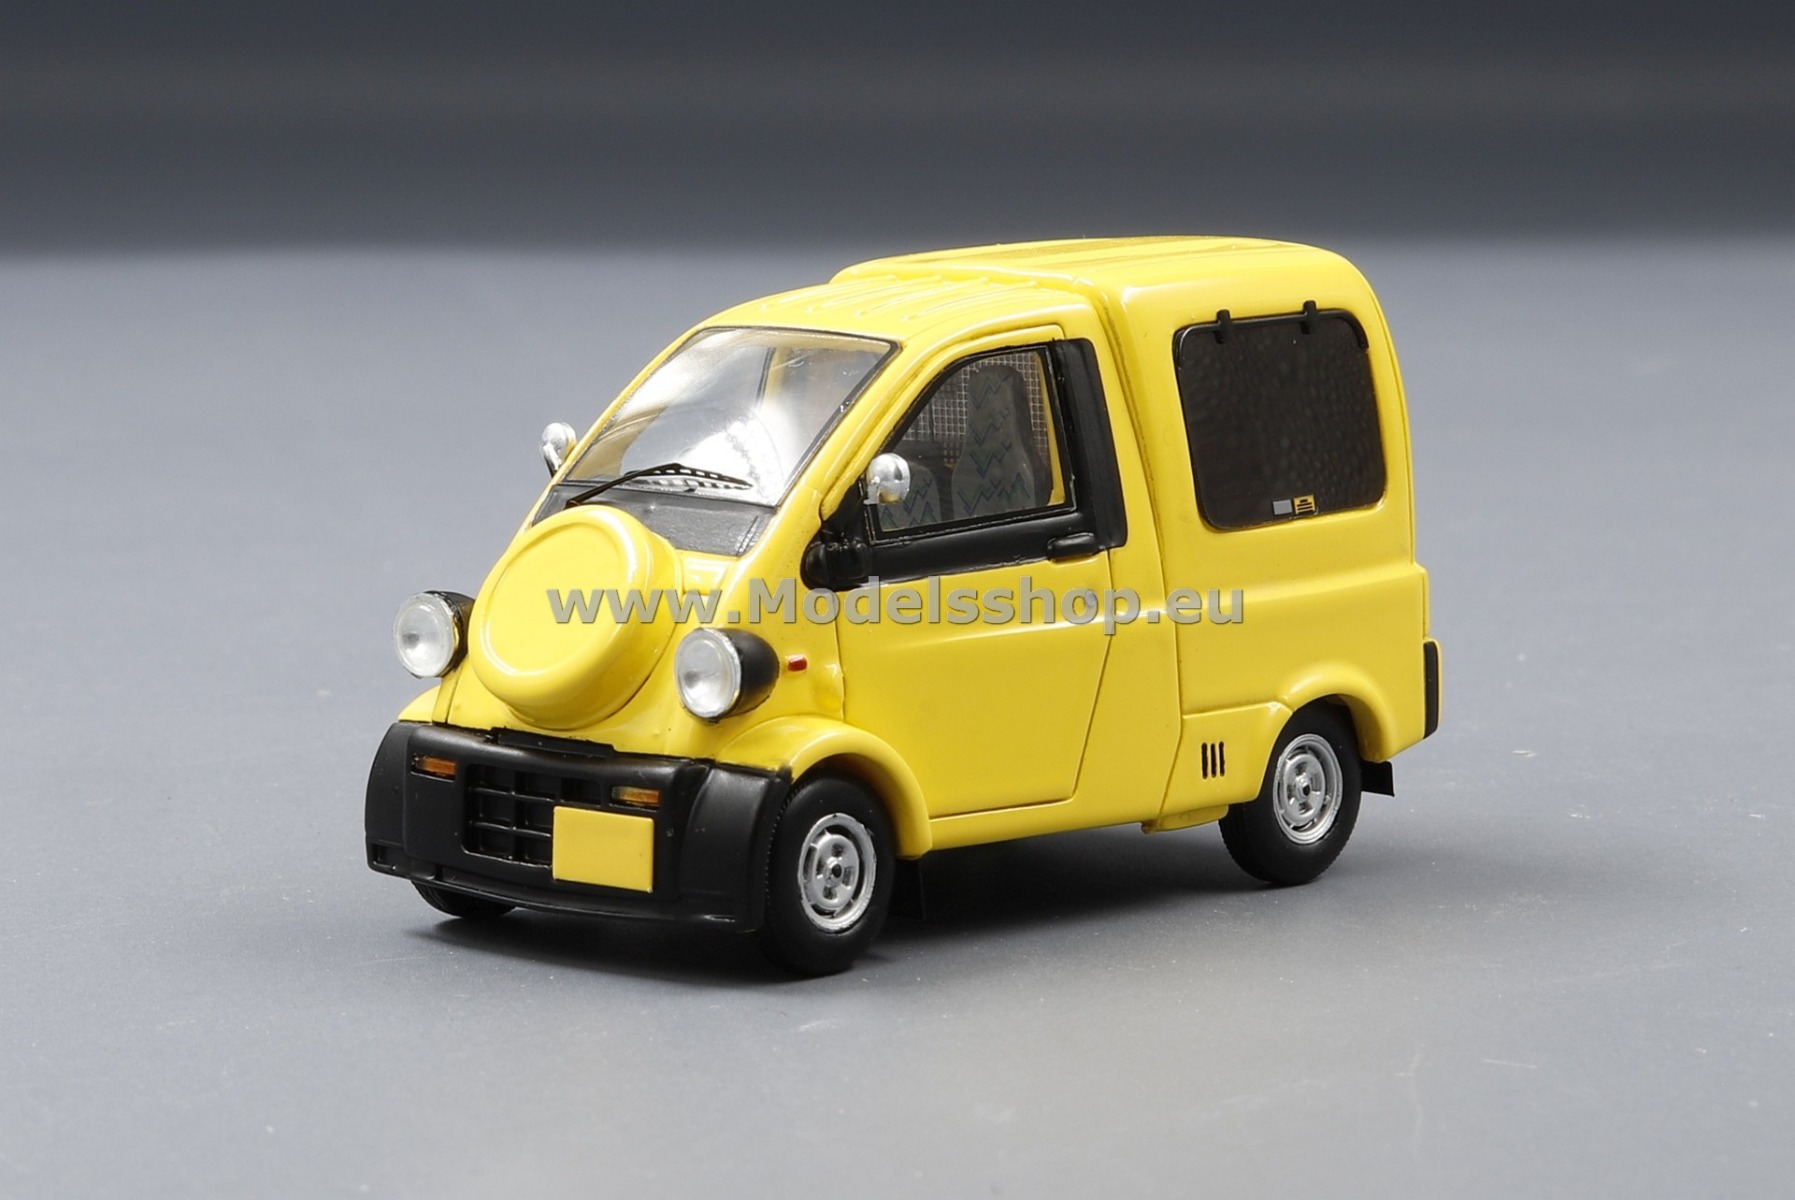 Spark SJ031 Daihatsu Midget II Cargo, 1996 /yellow/ Limited edition 500pcs